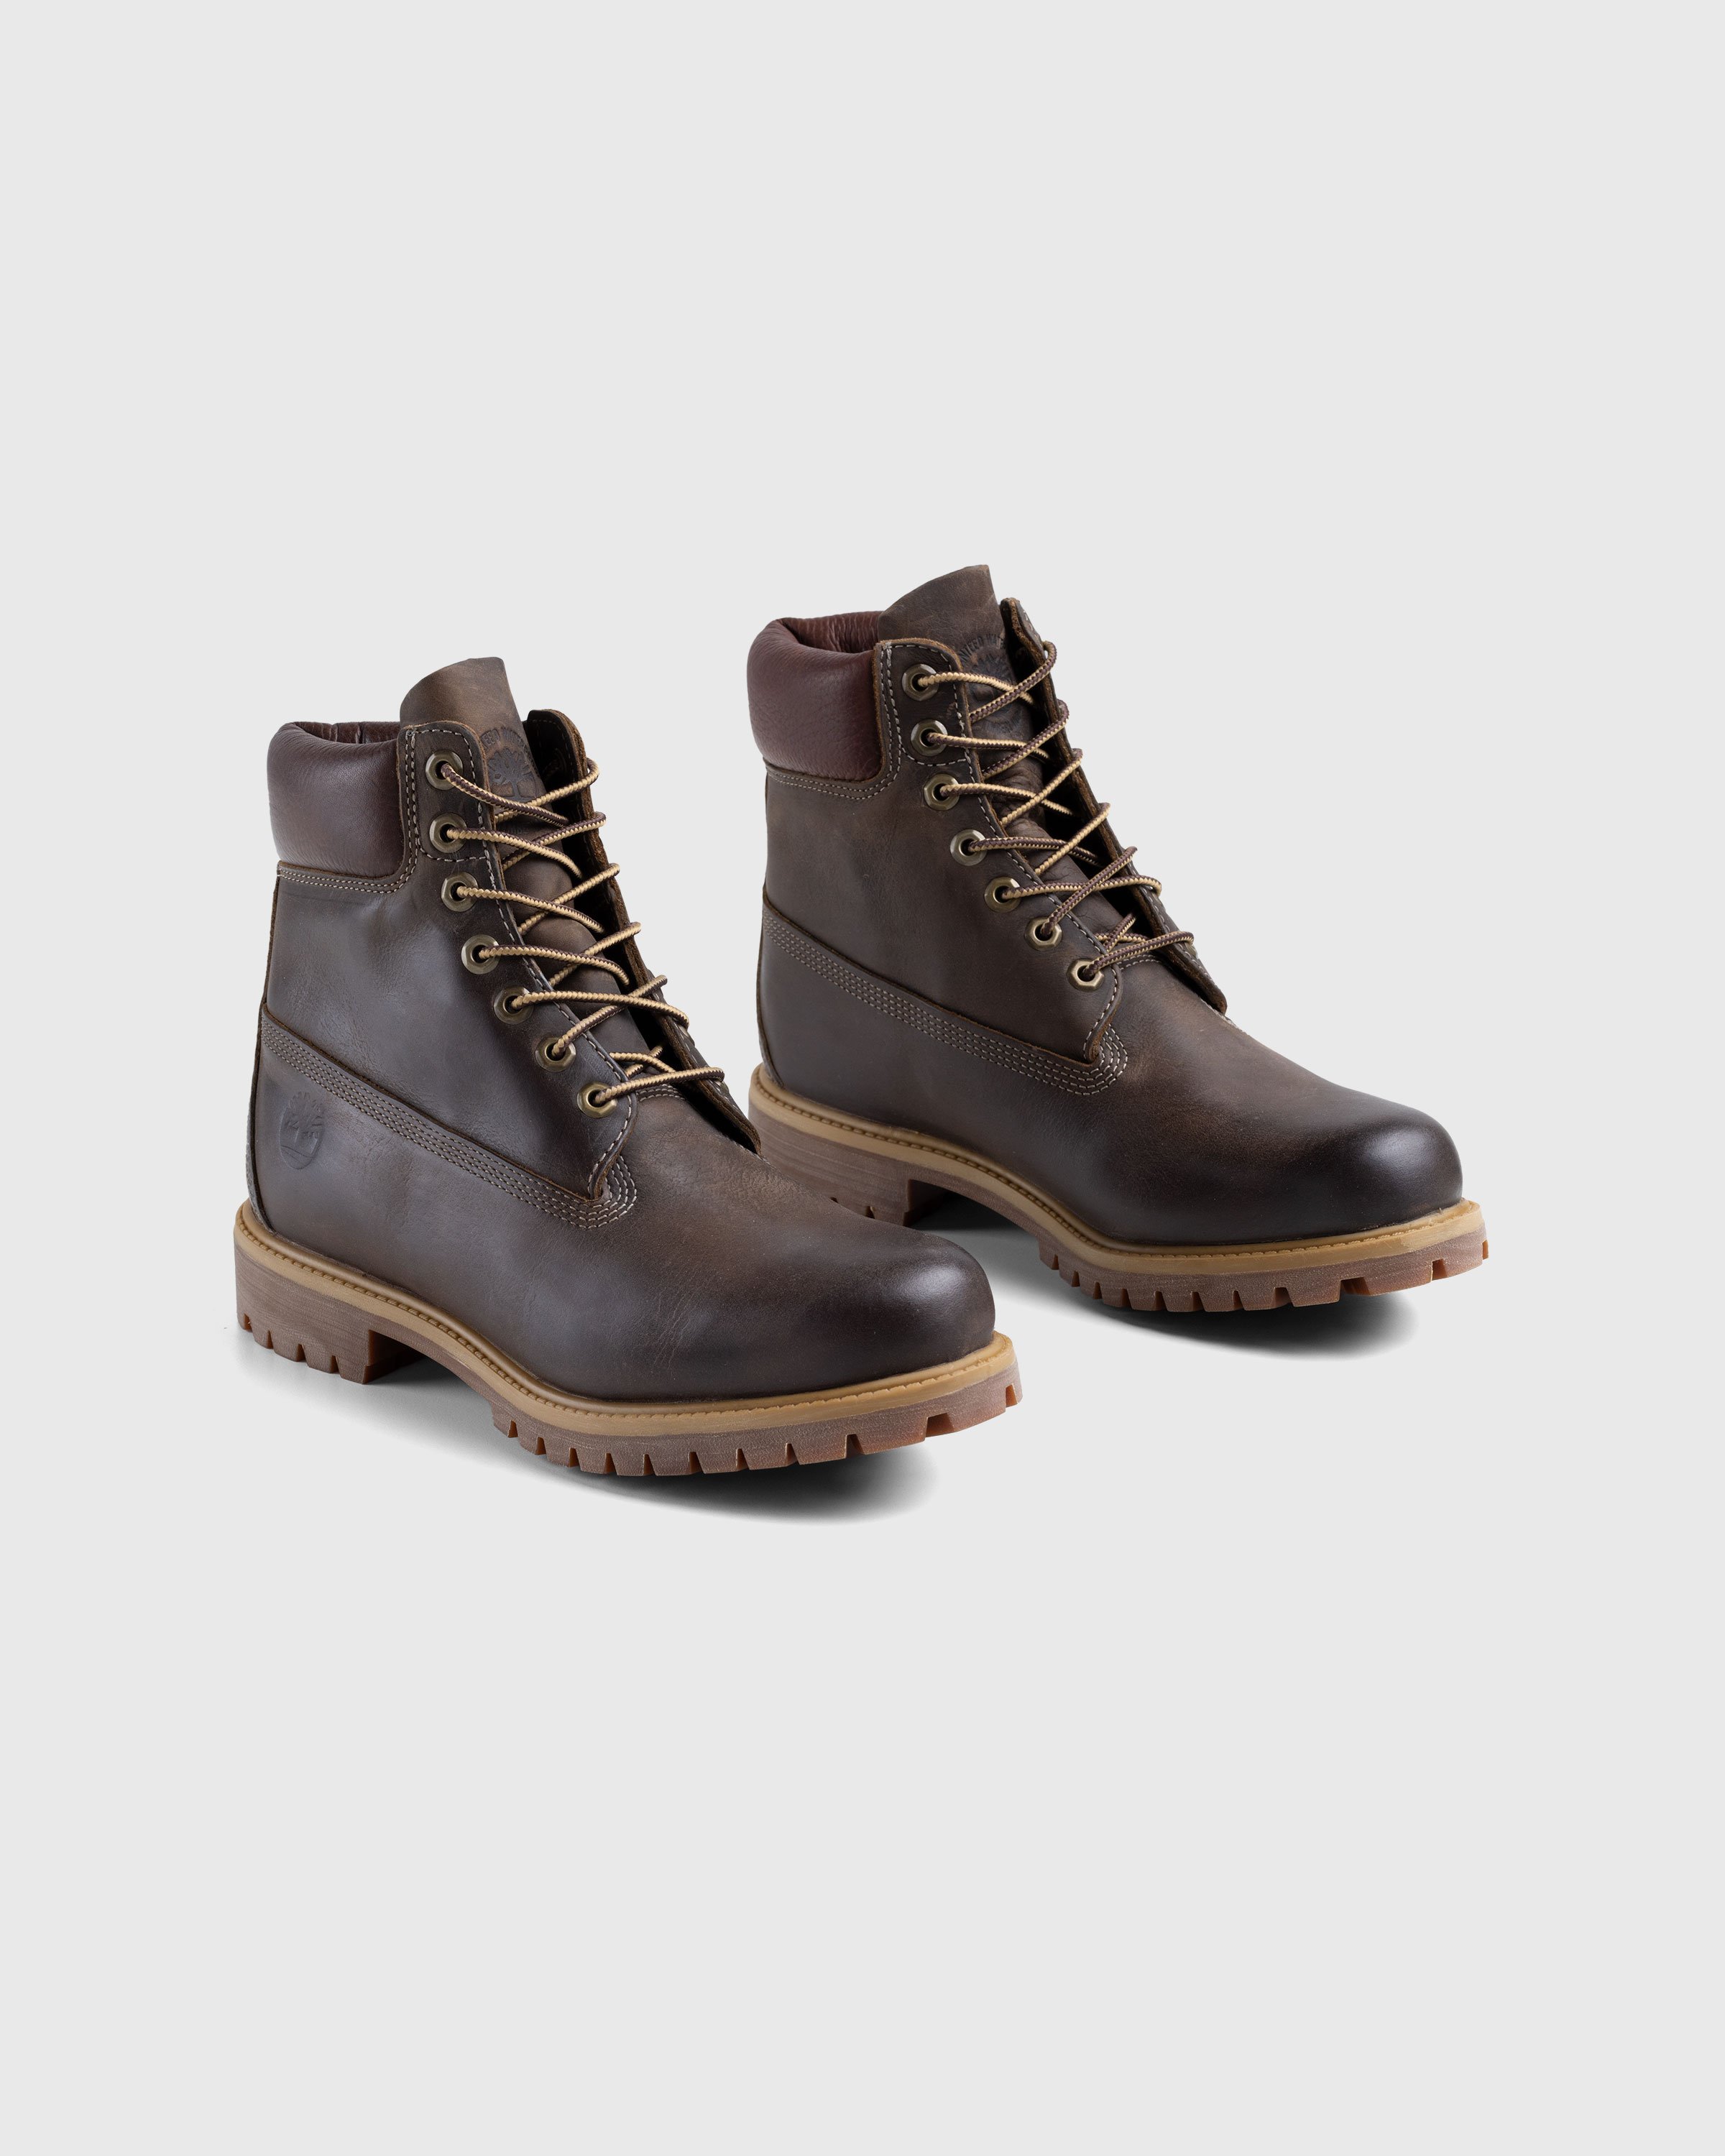 Timberland - Heritage 6 in Premium Brown - Footwear - Brown - Image 3